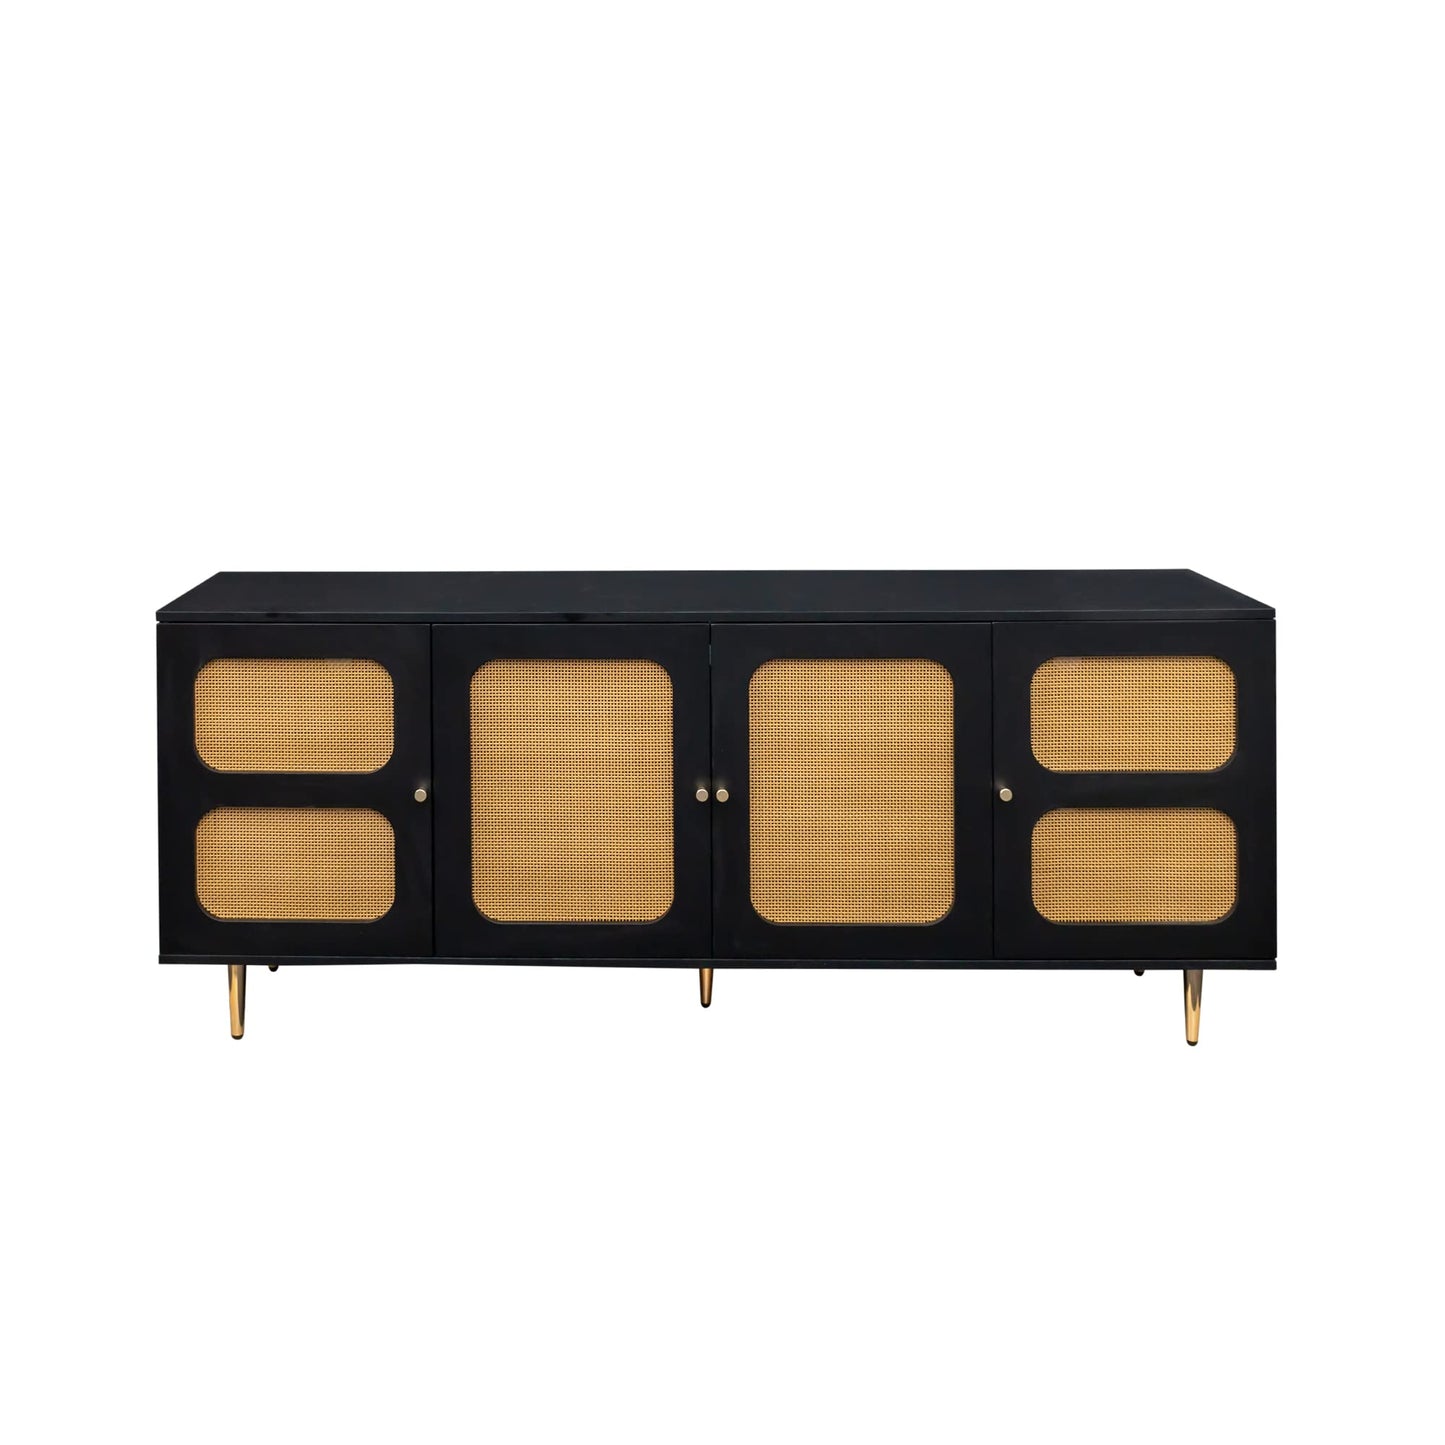 VZADGWA Buffet Sideboard Cabinets with Artificial Rattan Door, Metal Legs, Modern Luxury Freestanding Storage Cabinet, Large Storage Space Kitchen